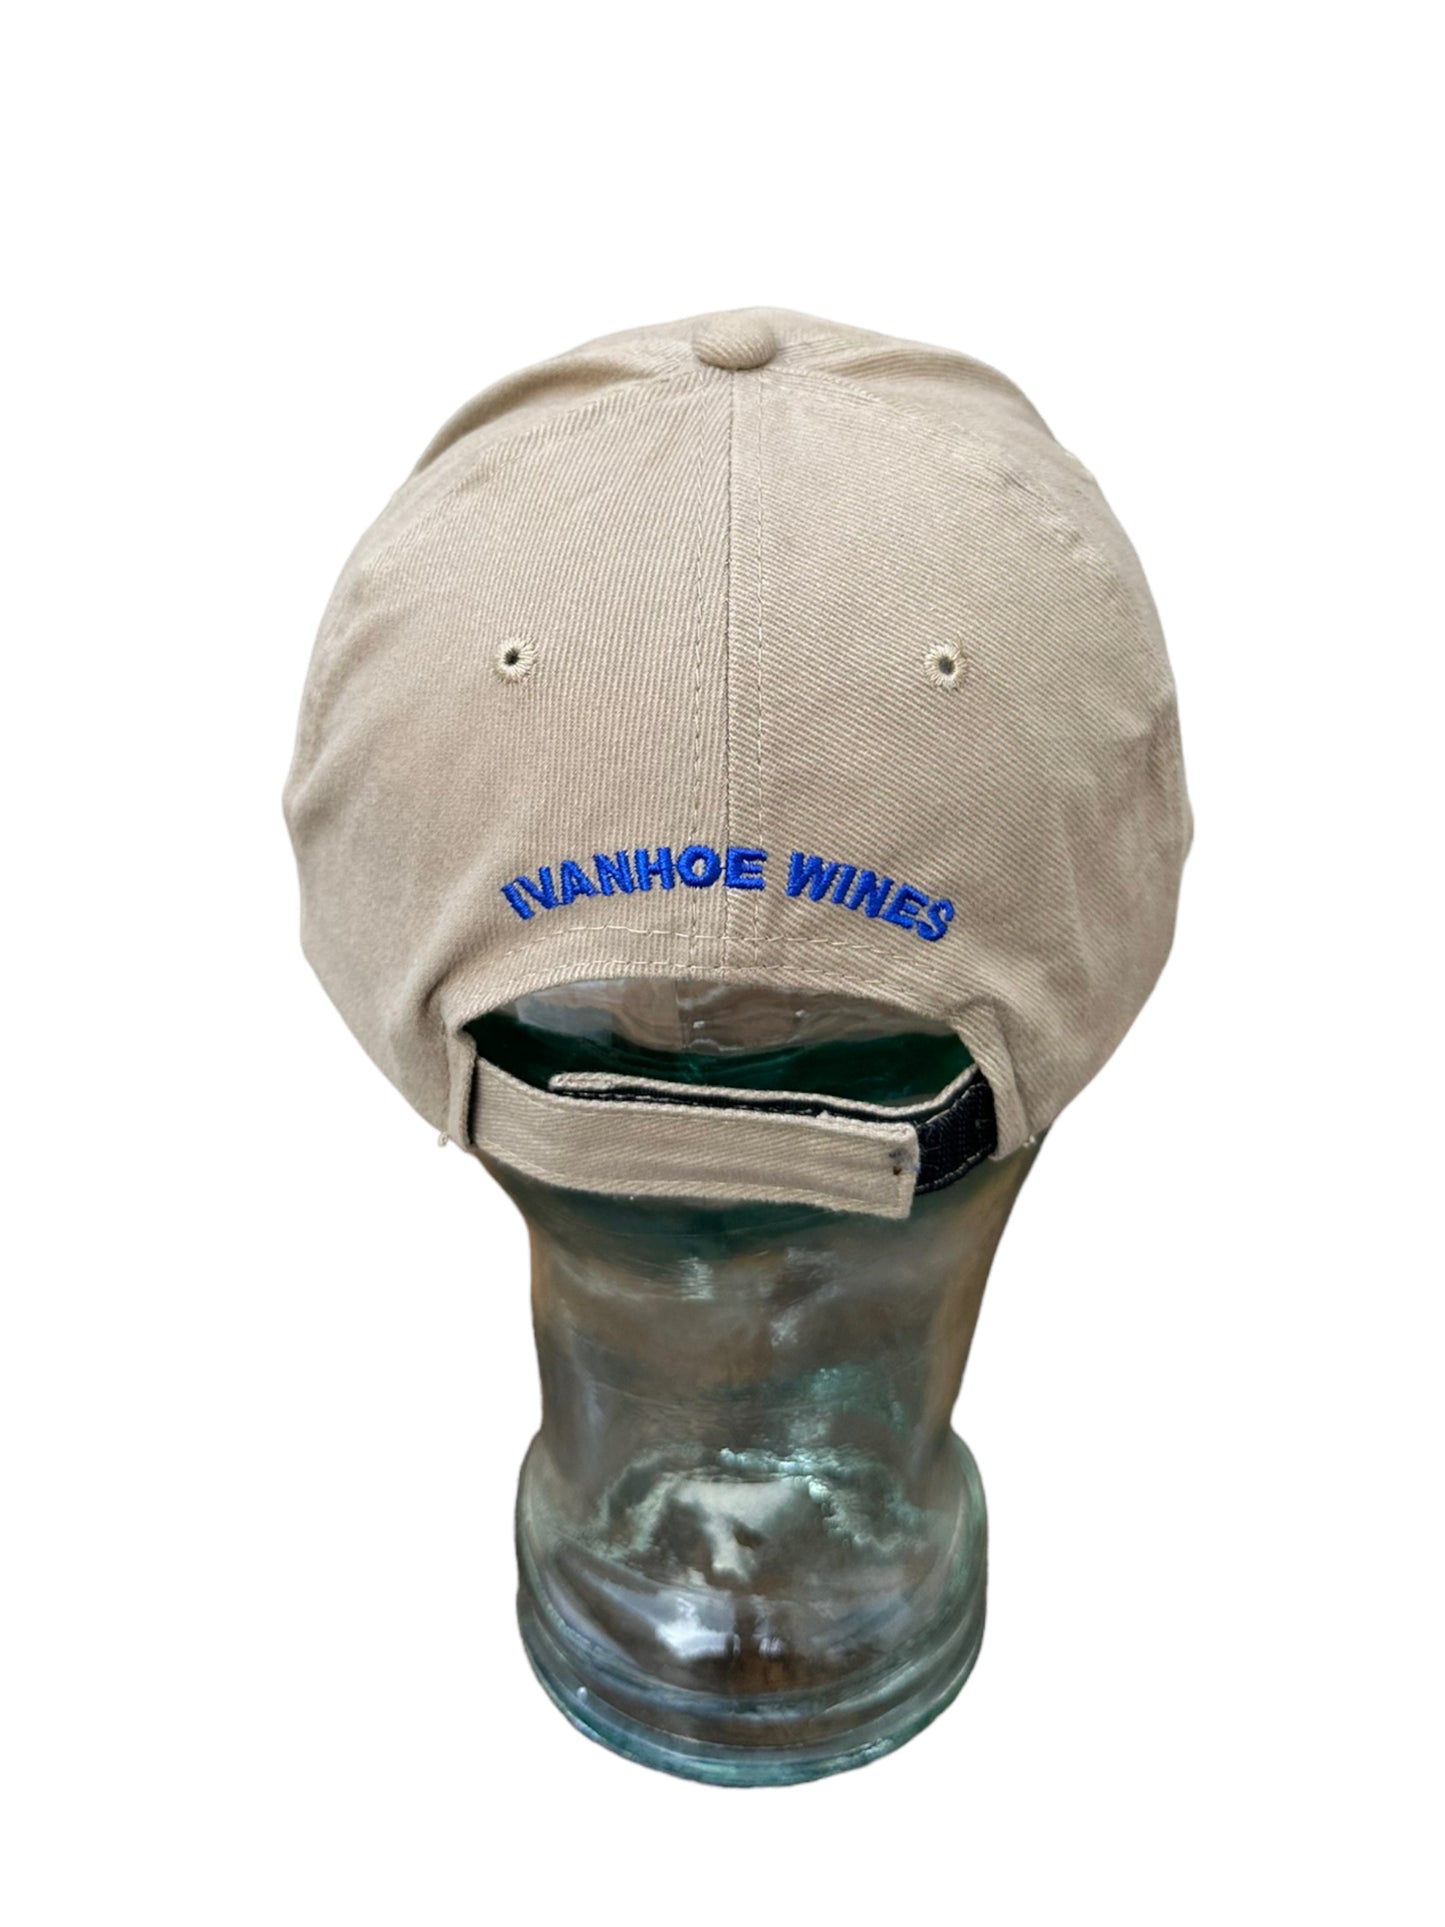 IVANHOE WINES SIGNED HAT